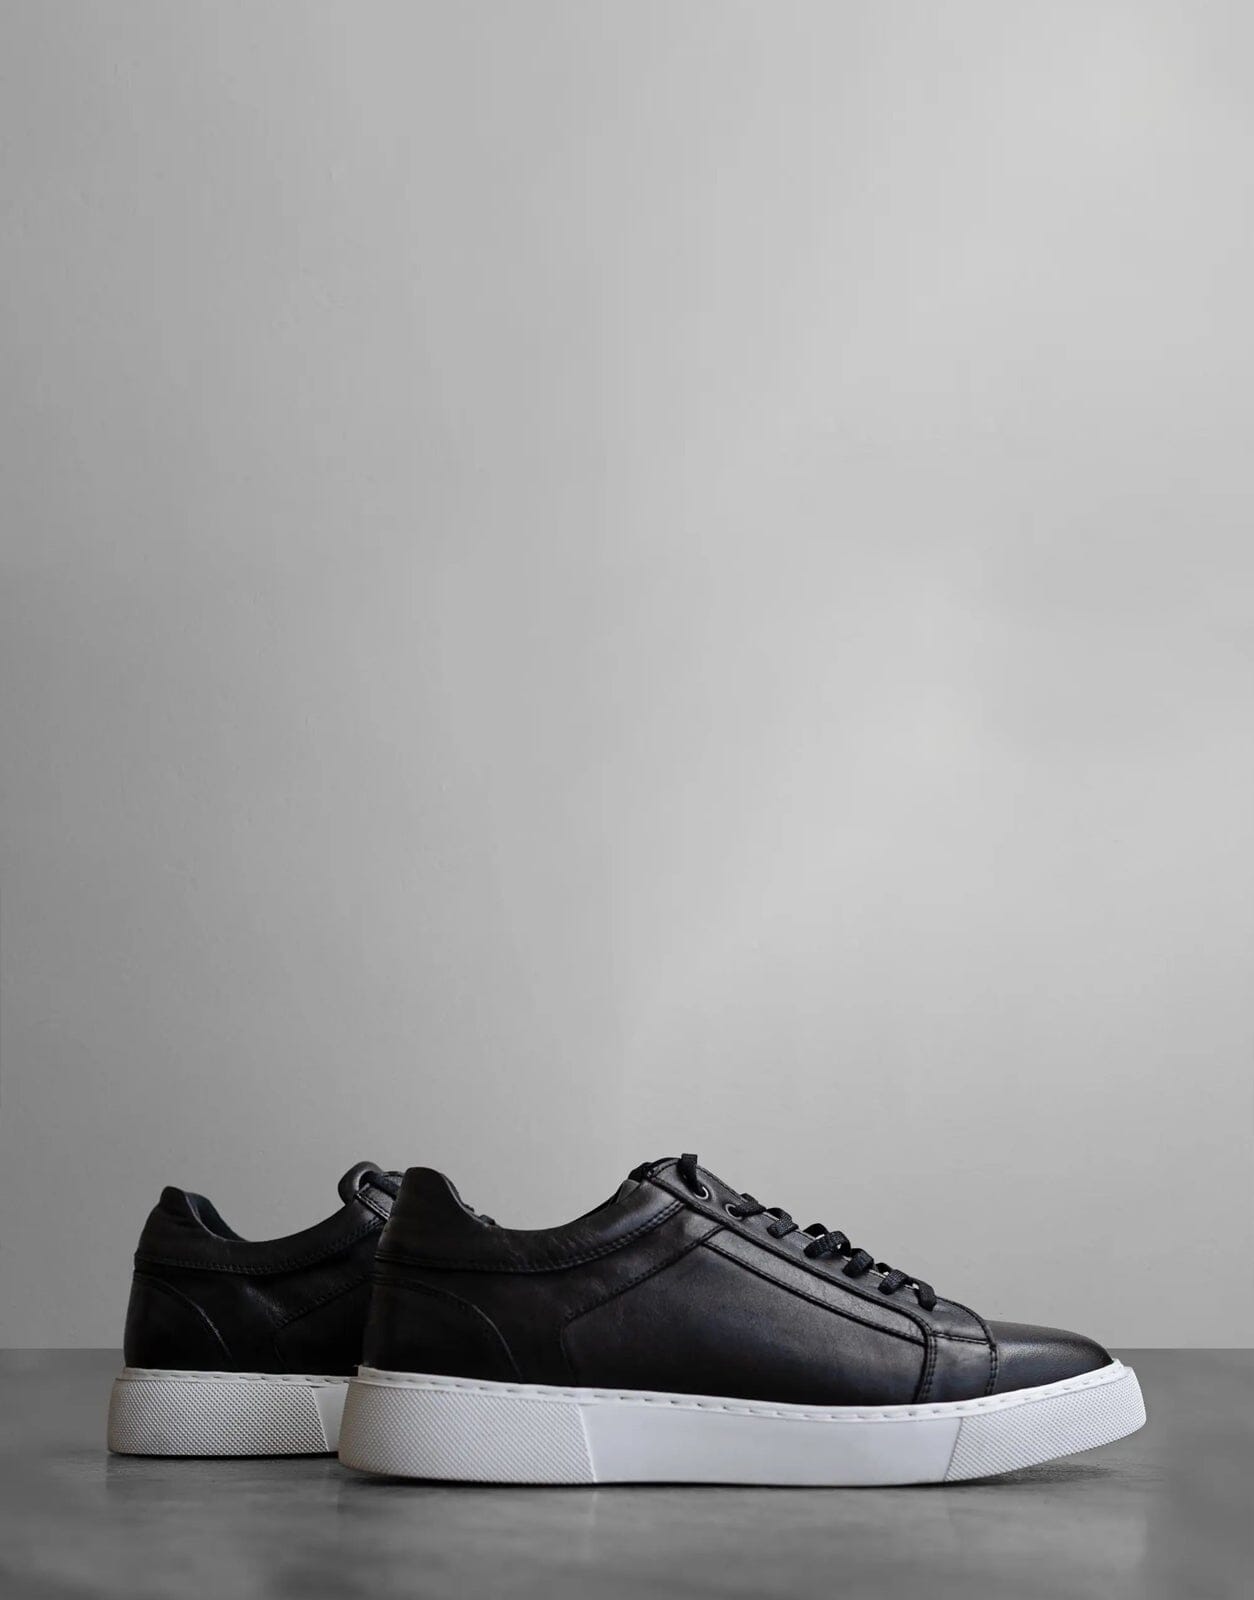 Fade Iconic Black/White Sneakers - Subwear